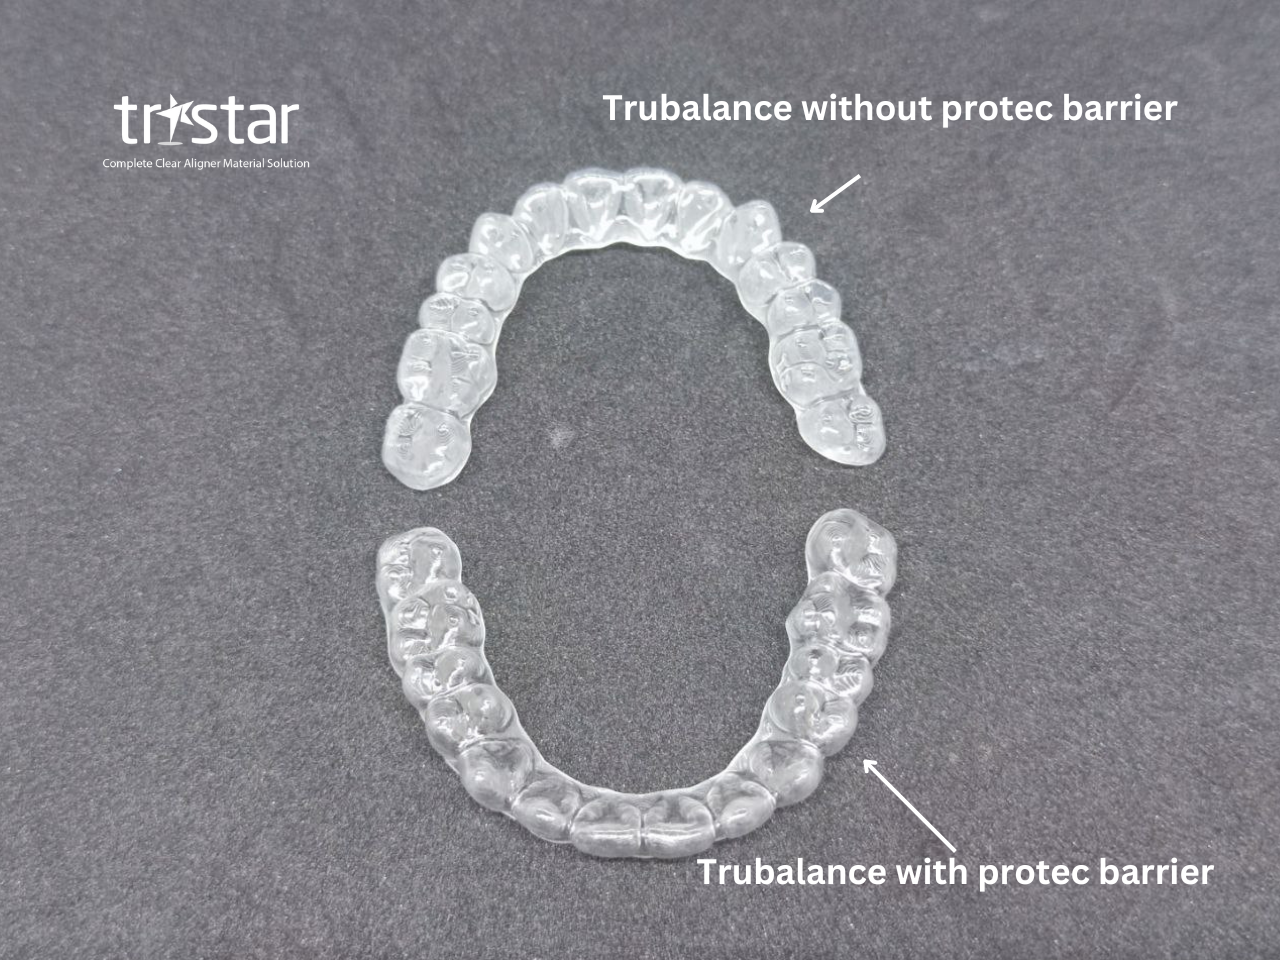 Introducing the Tristar Trubalance Protec Film : TRISTAR-Aligner Material